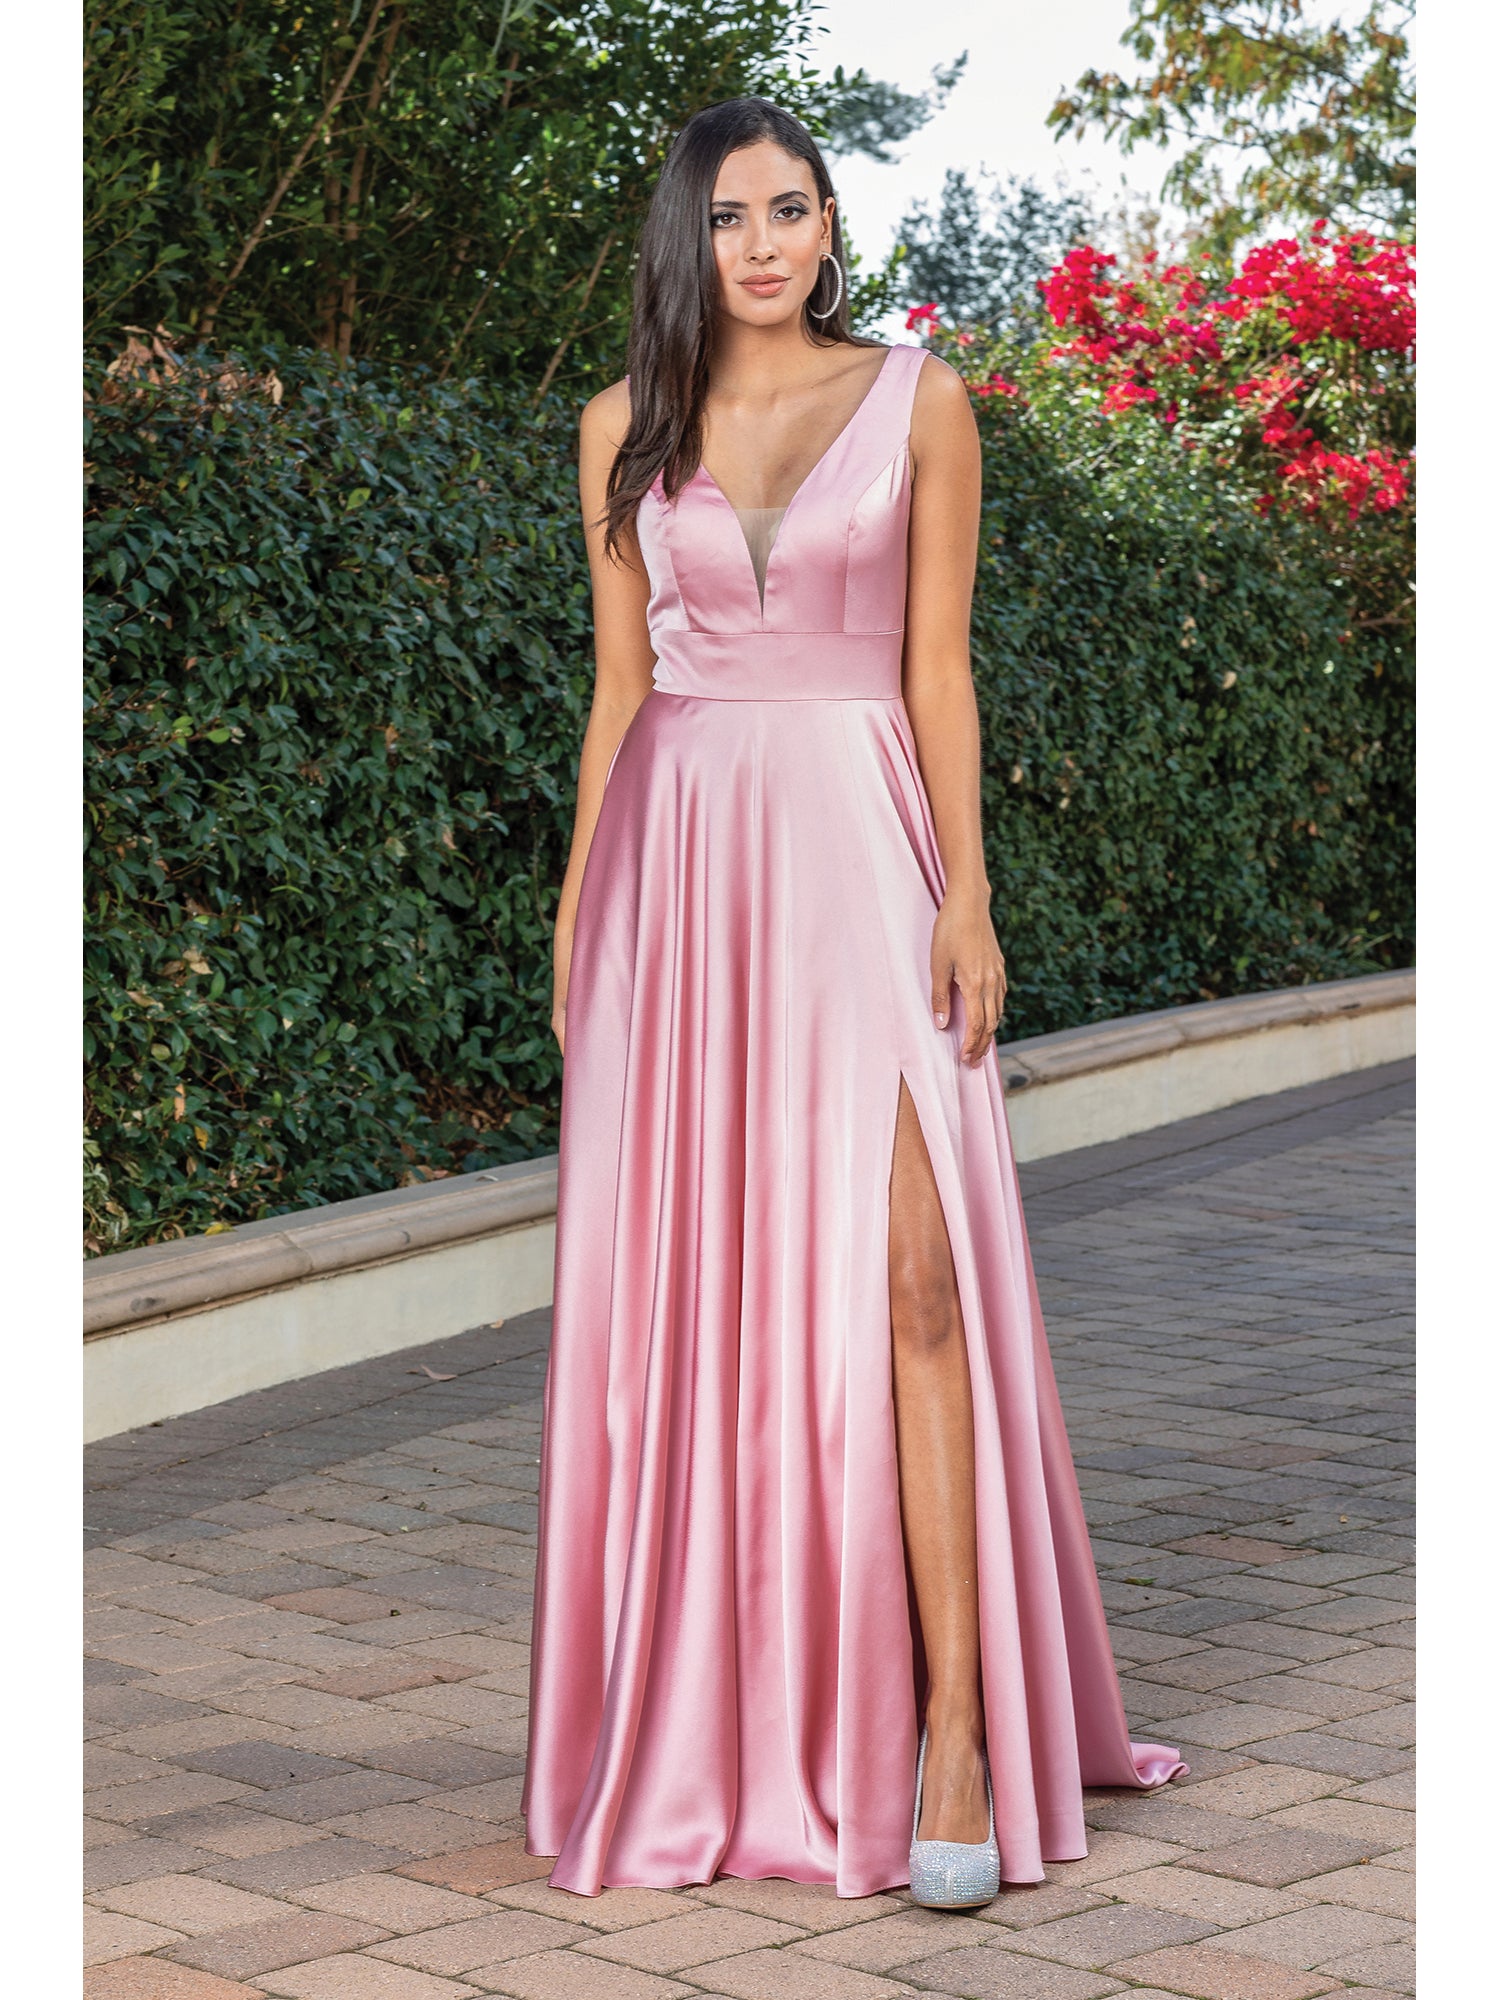 Rose Satin A-Line Classic Long Prom Dress